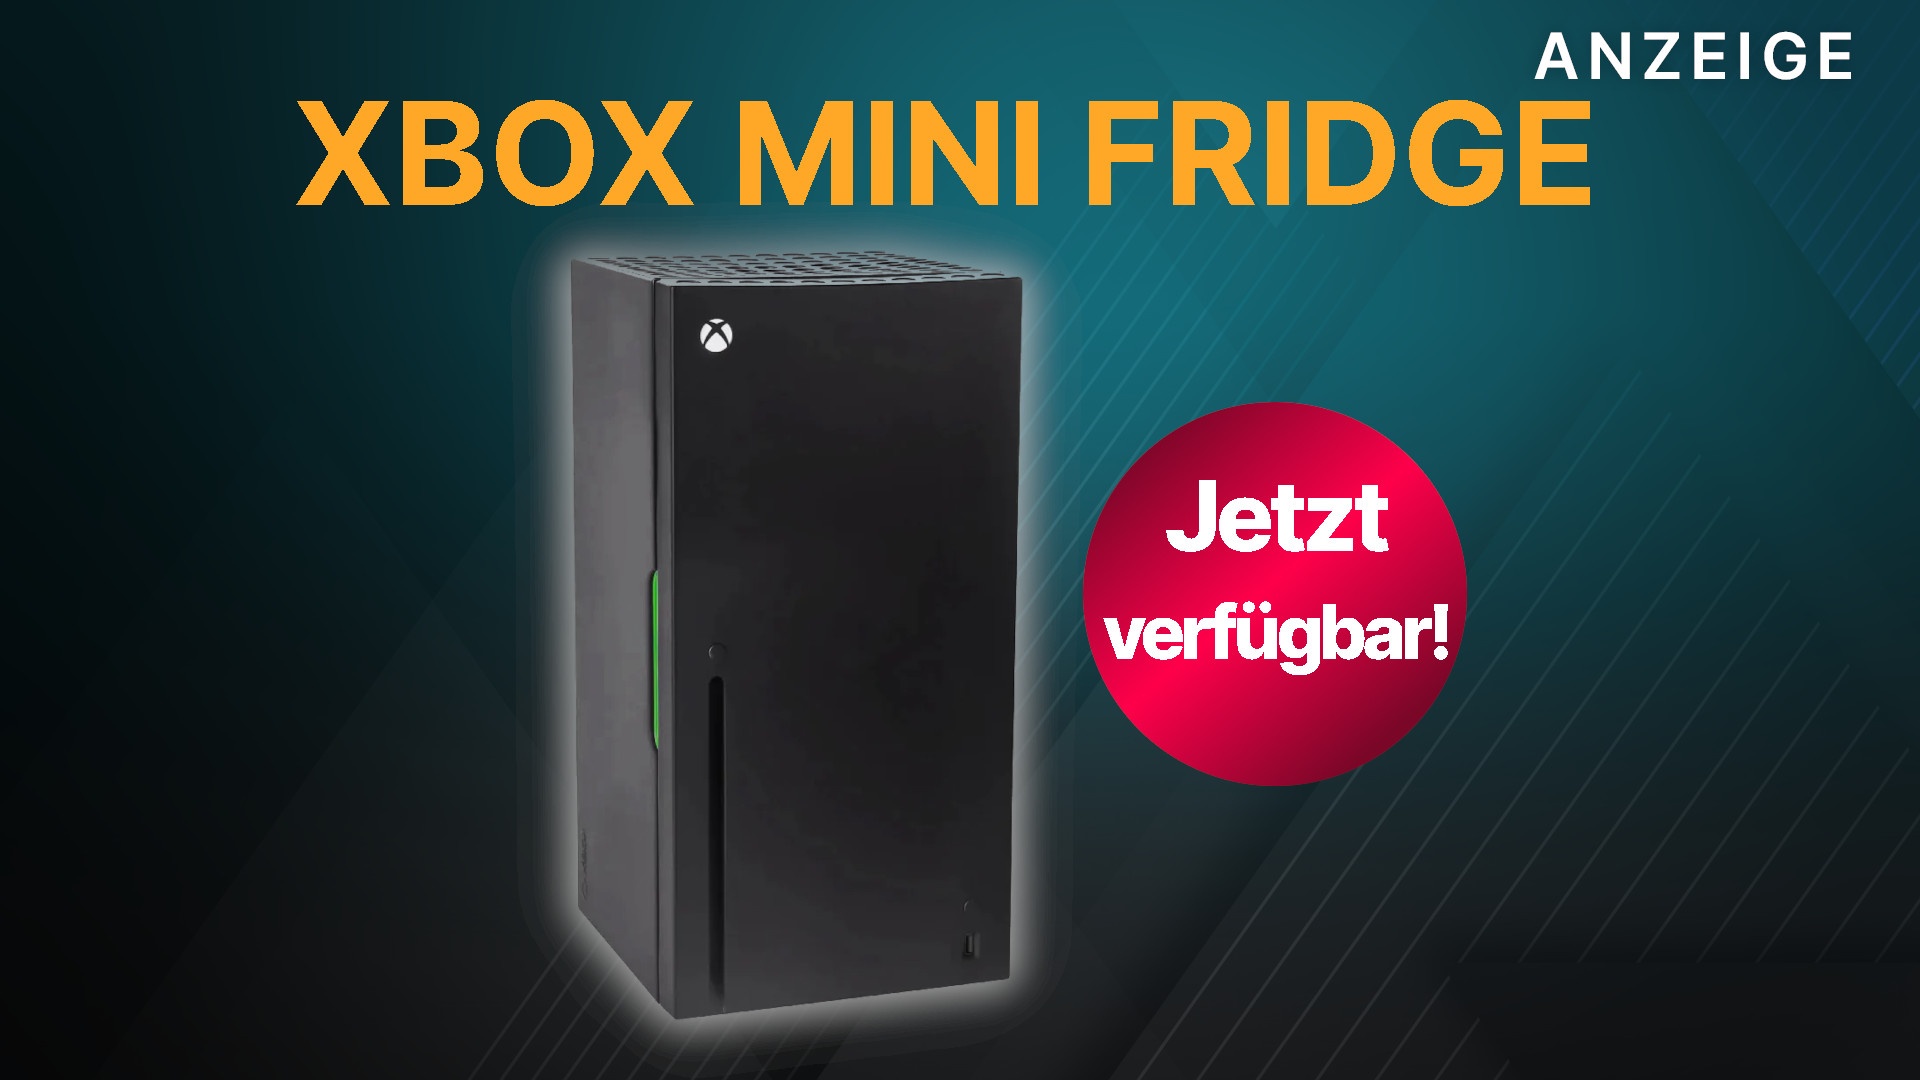 Xbox Mini Fridge: Sichert euch hier den Mini-Kühlschrank im Look